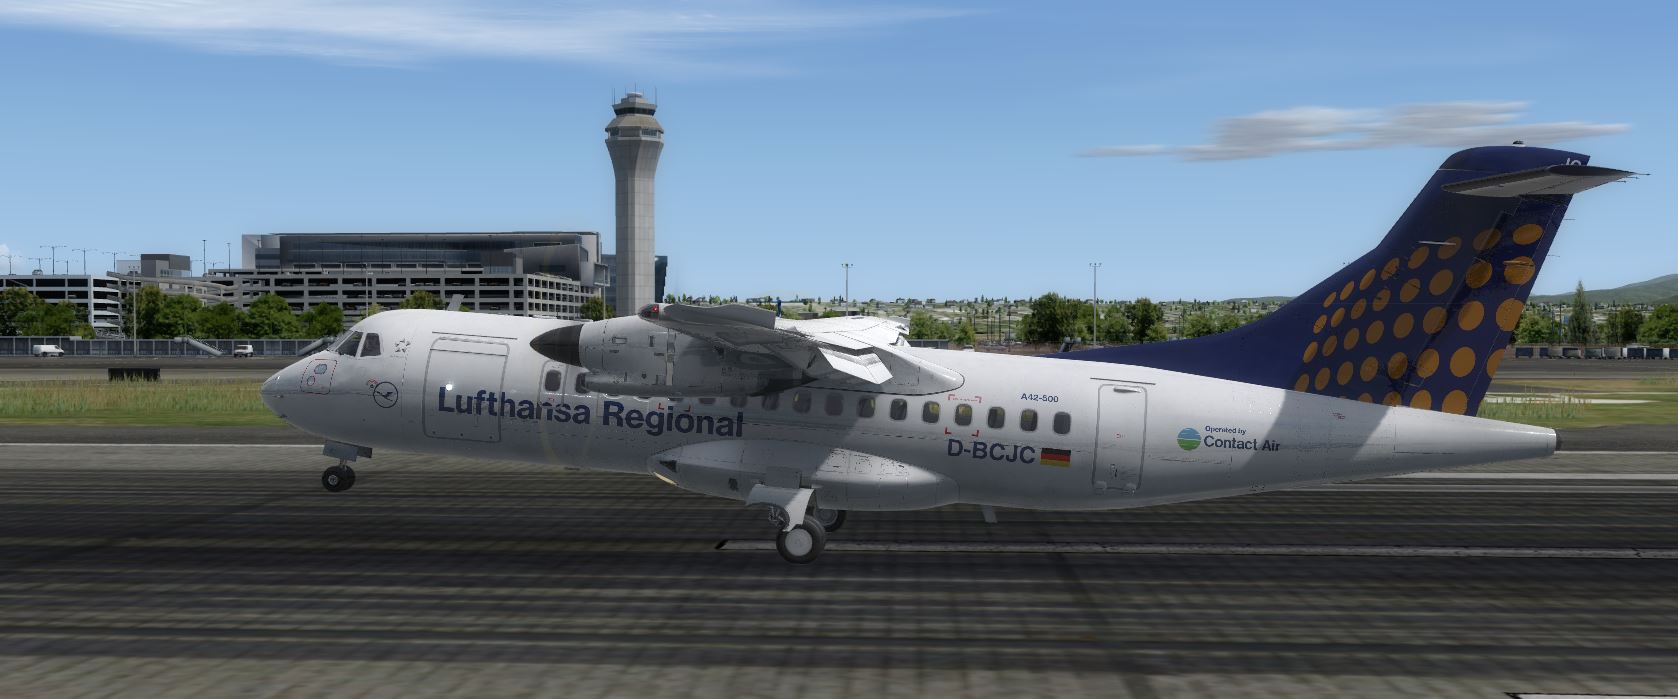 ATR42-500 Lufthansa-8148 